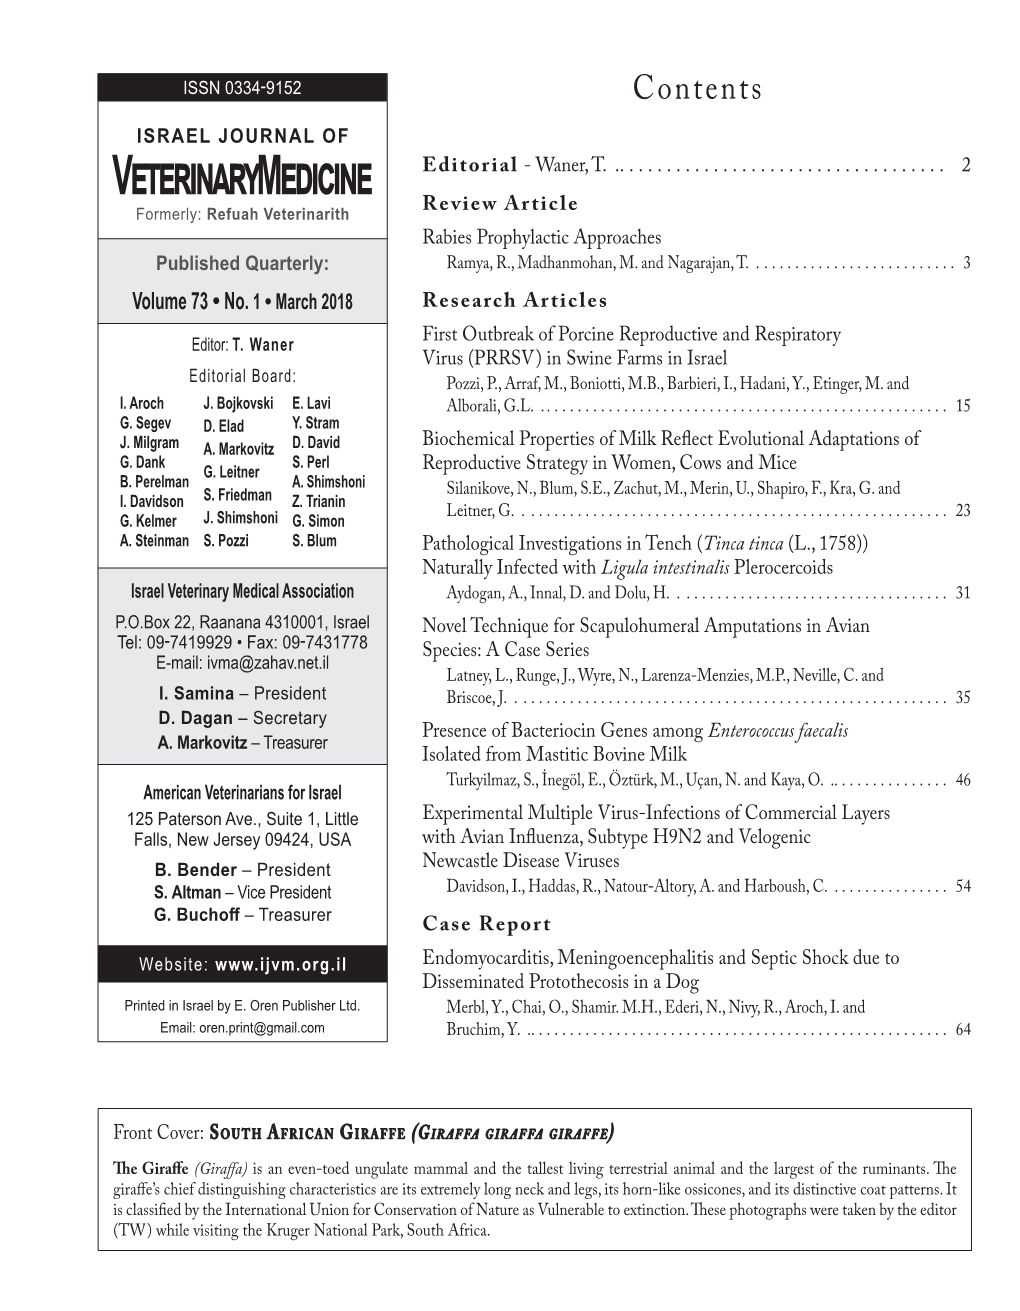 Israel Journal of Veterinary Medicine